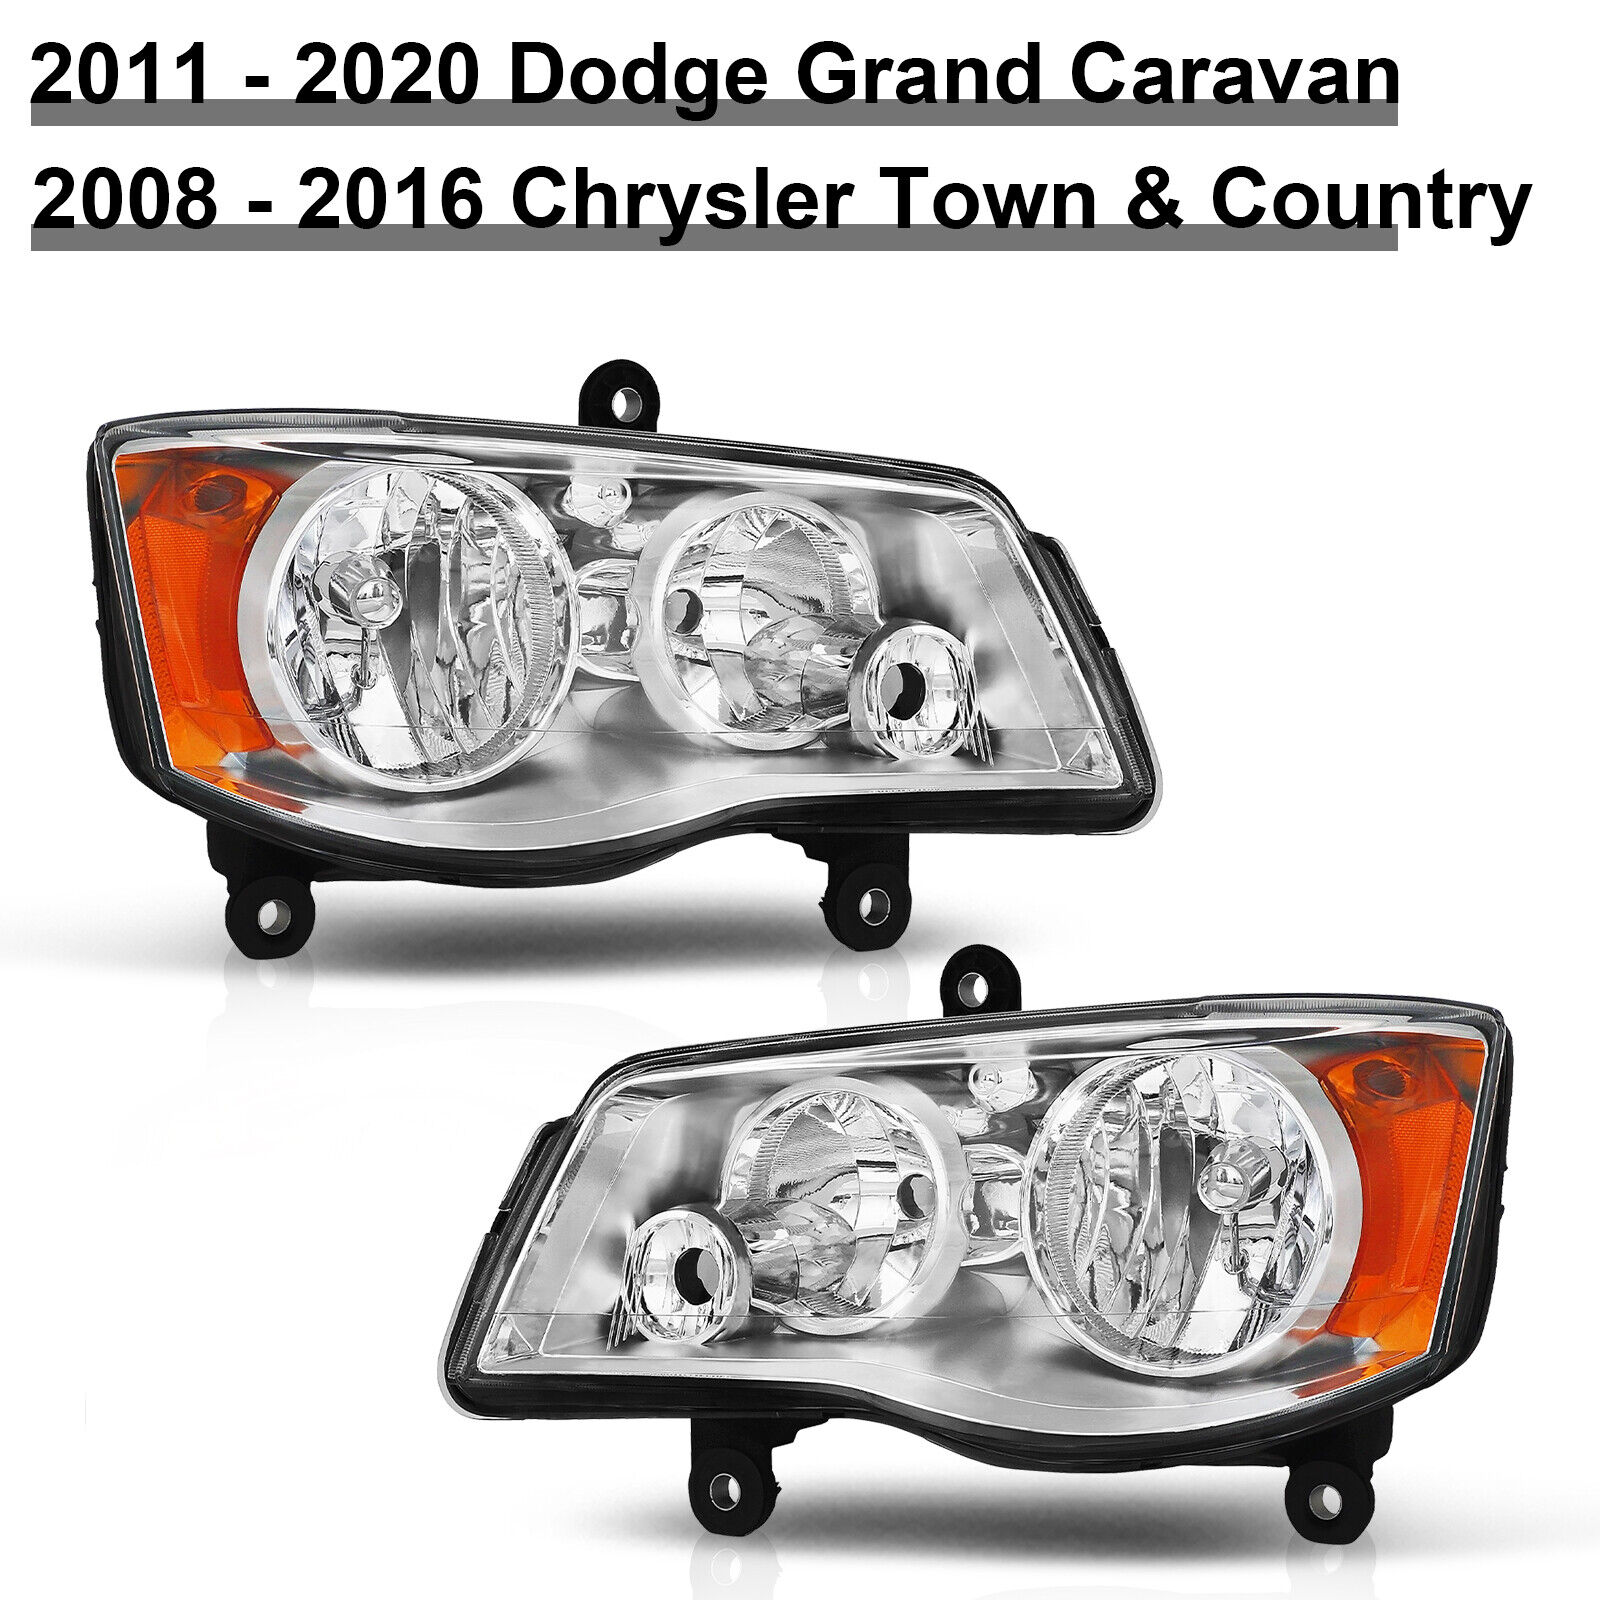 2011-2019 Dodge Grand Caravan 08-16 Chrysler Town & Country Headlights Headlamps